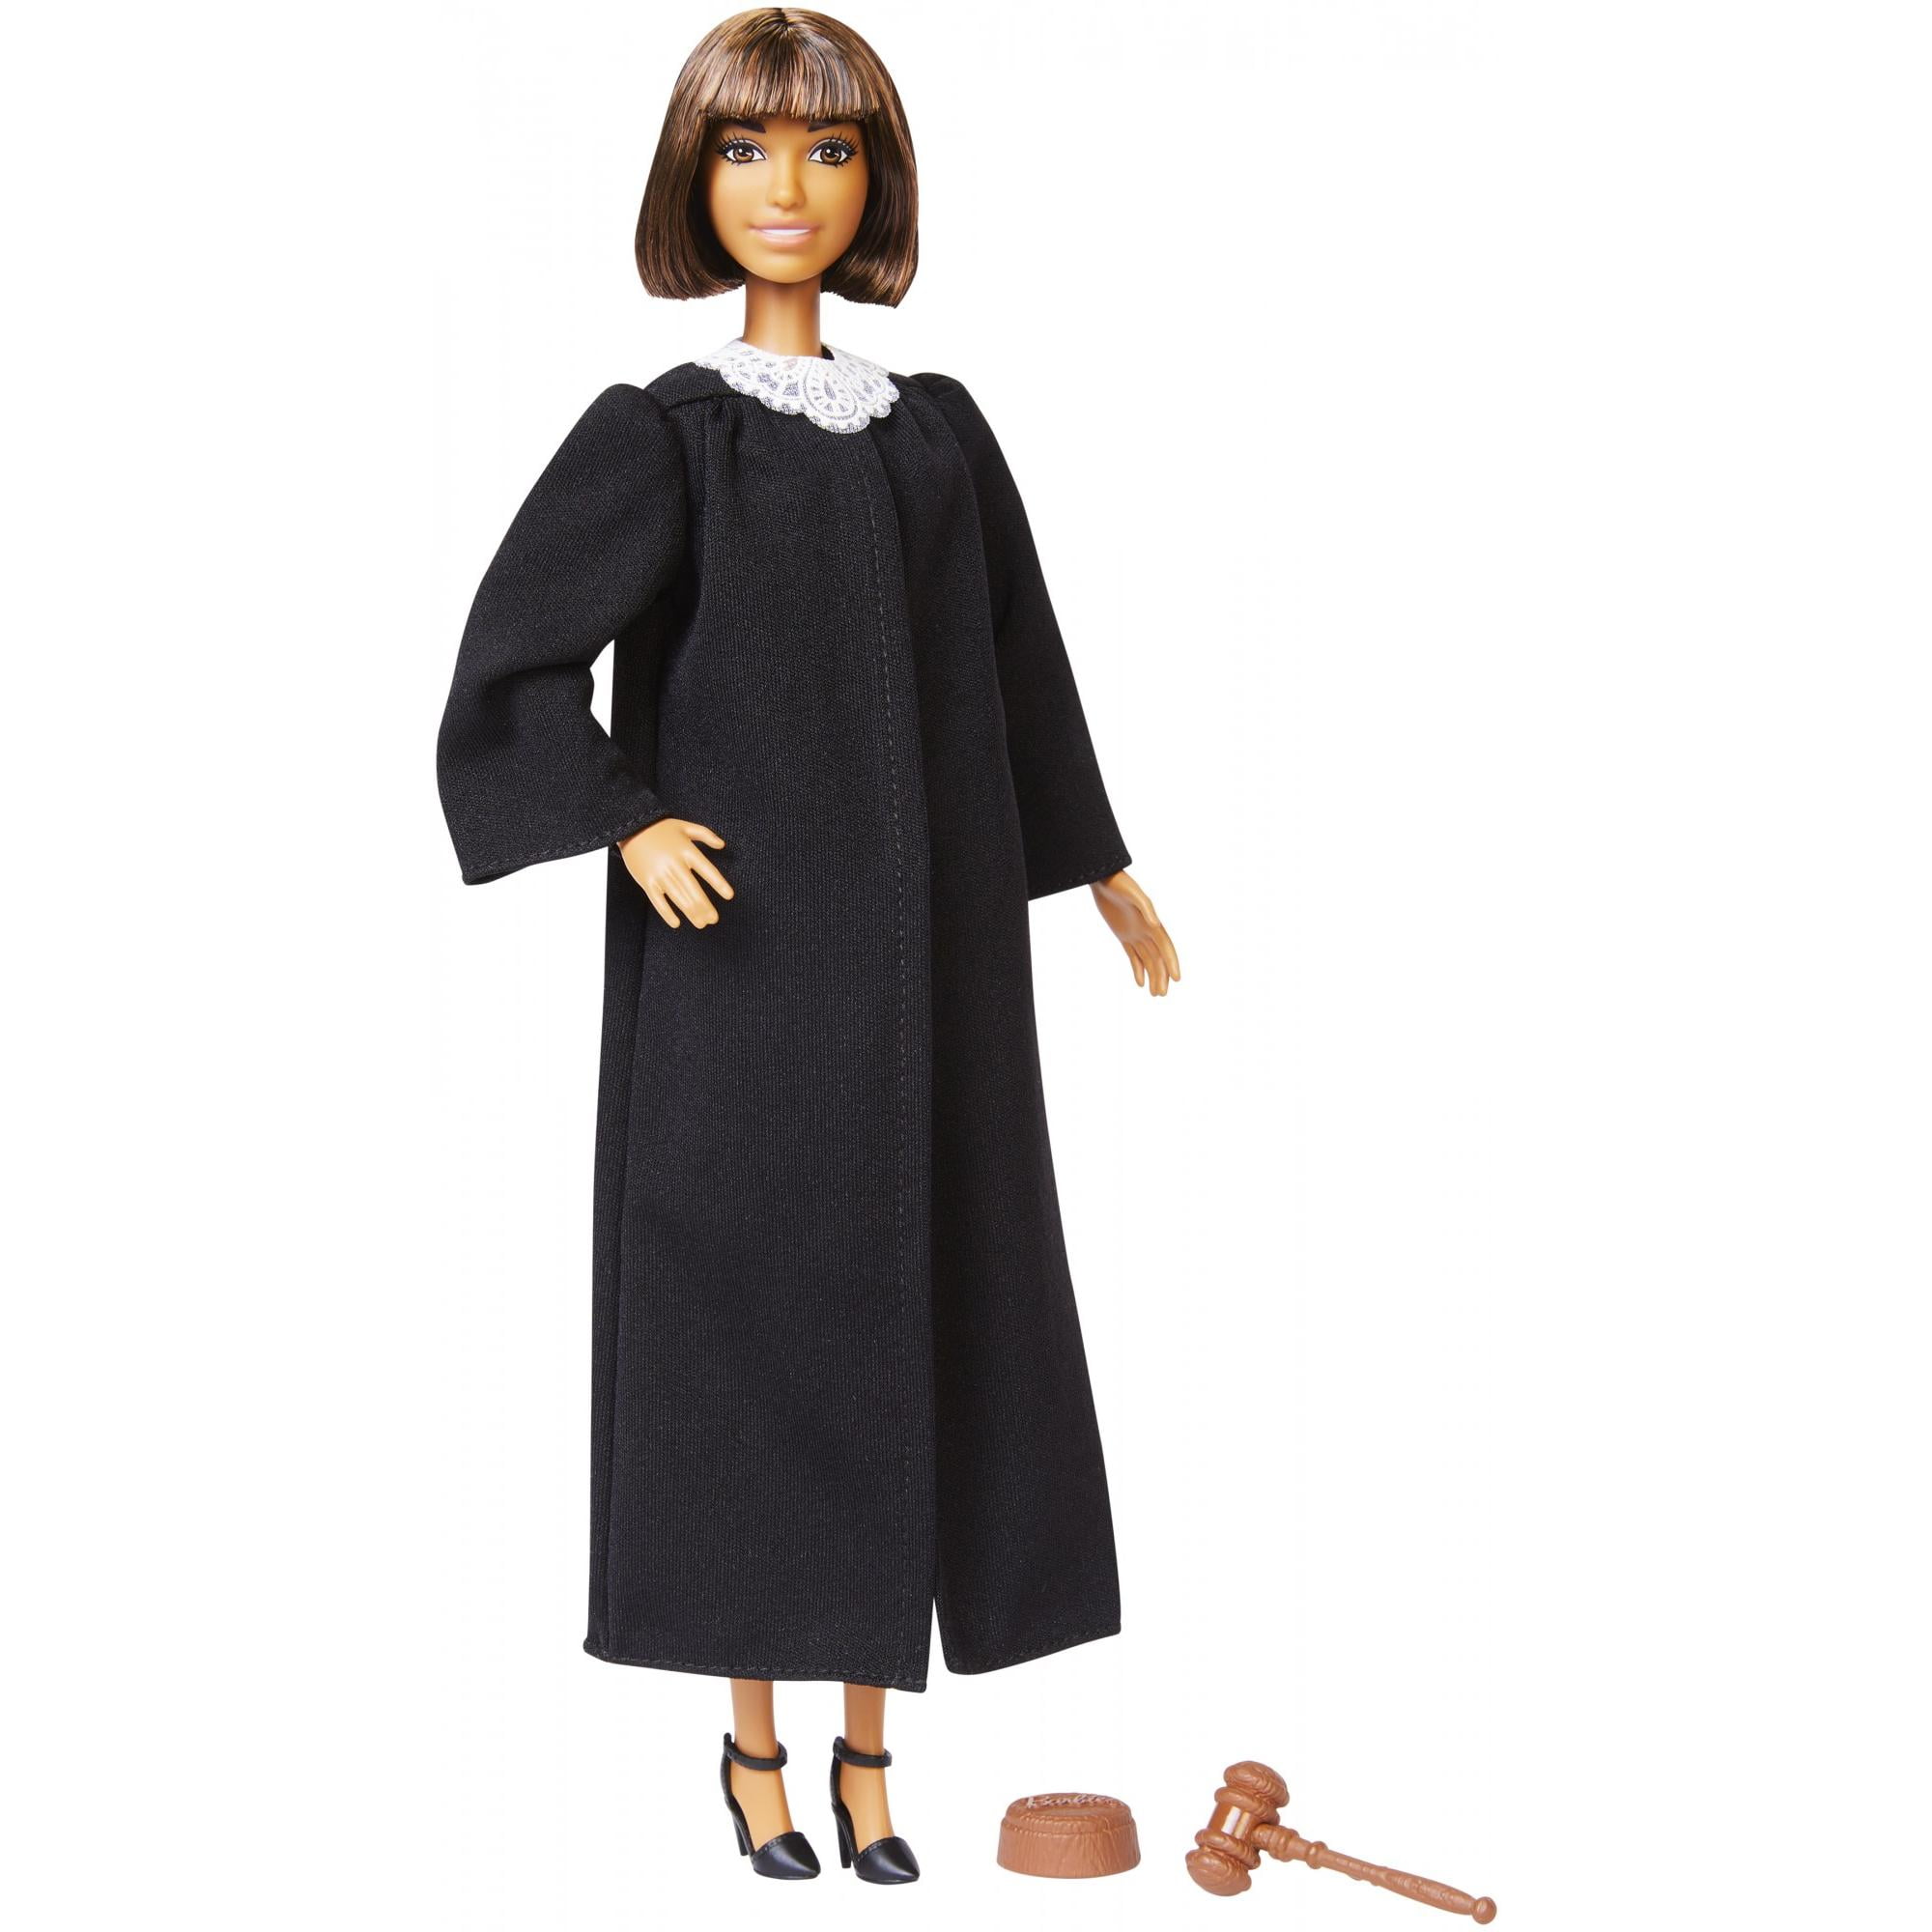 Barbie Career of the Year Judge Doll, Short Brown Hair